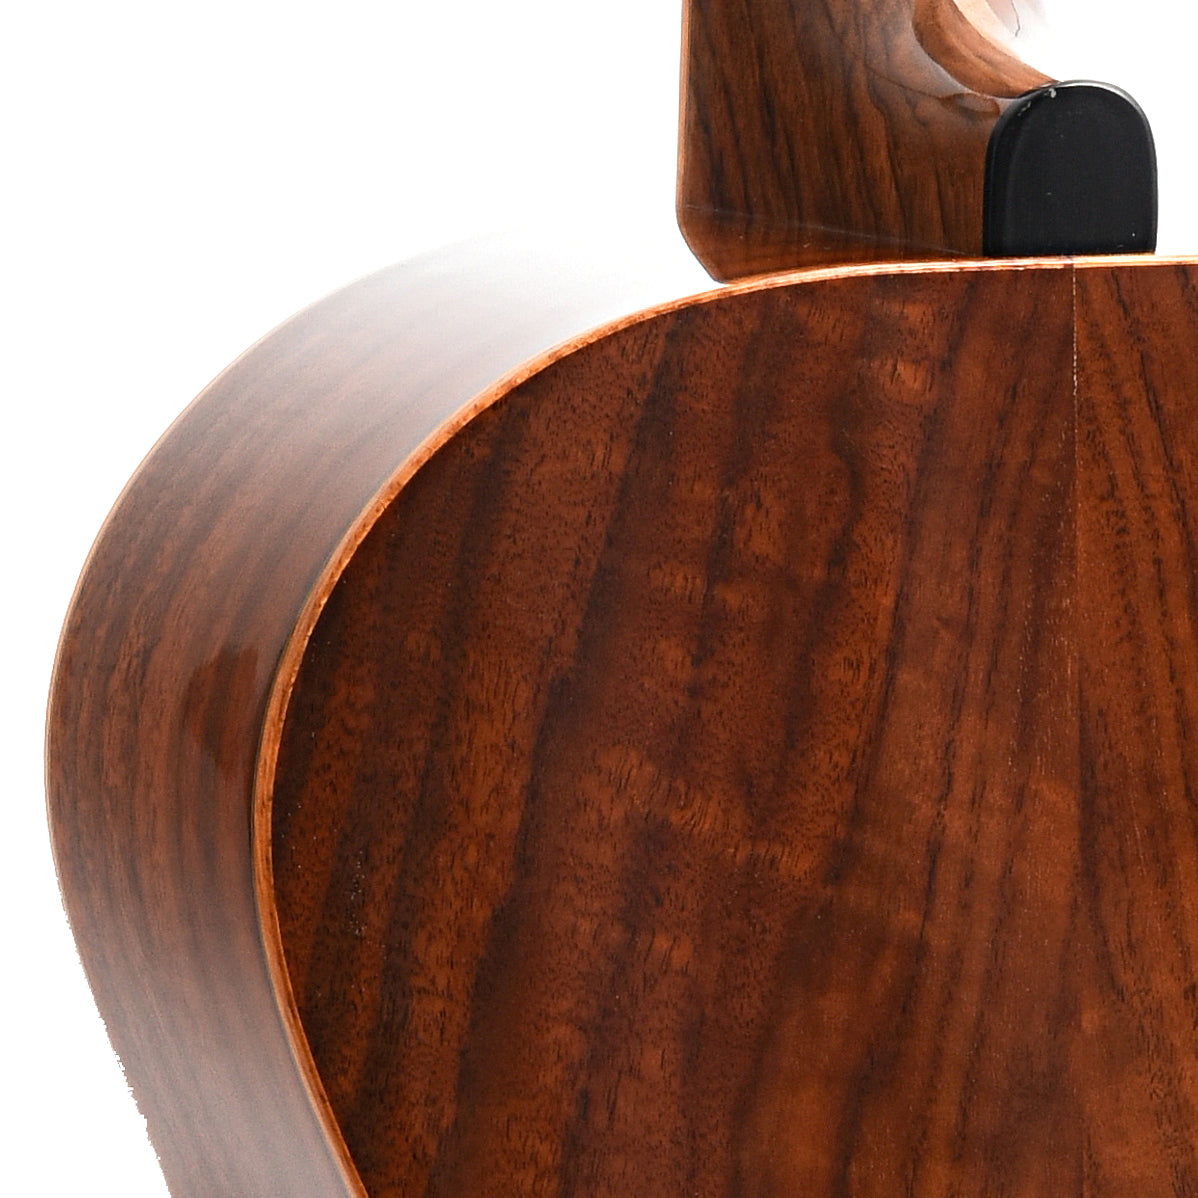 Image 11 of H.G. Leach "Kirby" Model (c.2002) - SKU# 20U-208177 : Product Type Flat-top Guitars : Elderly Instruments